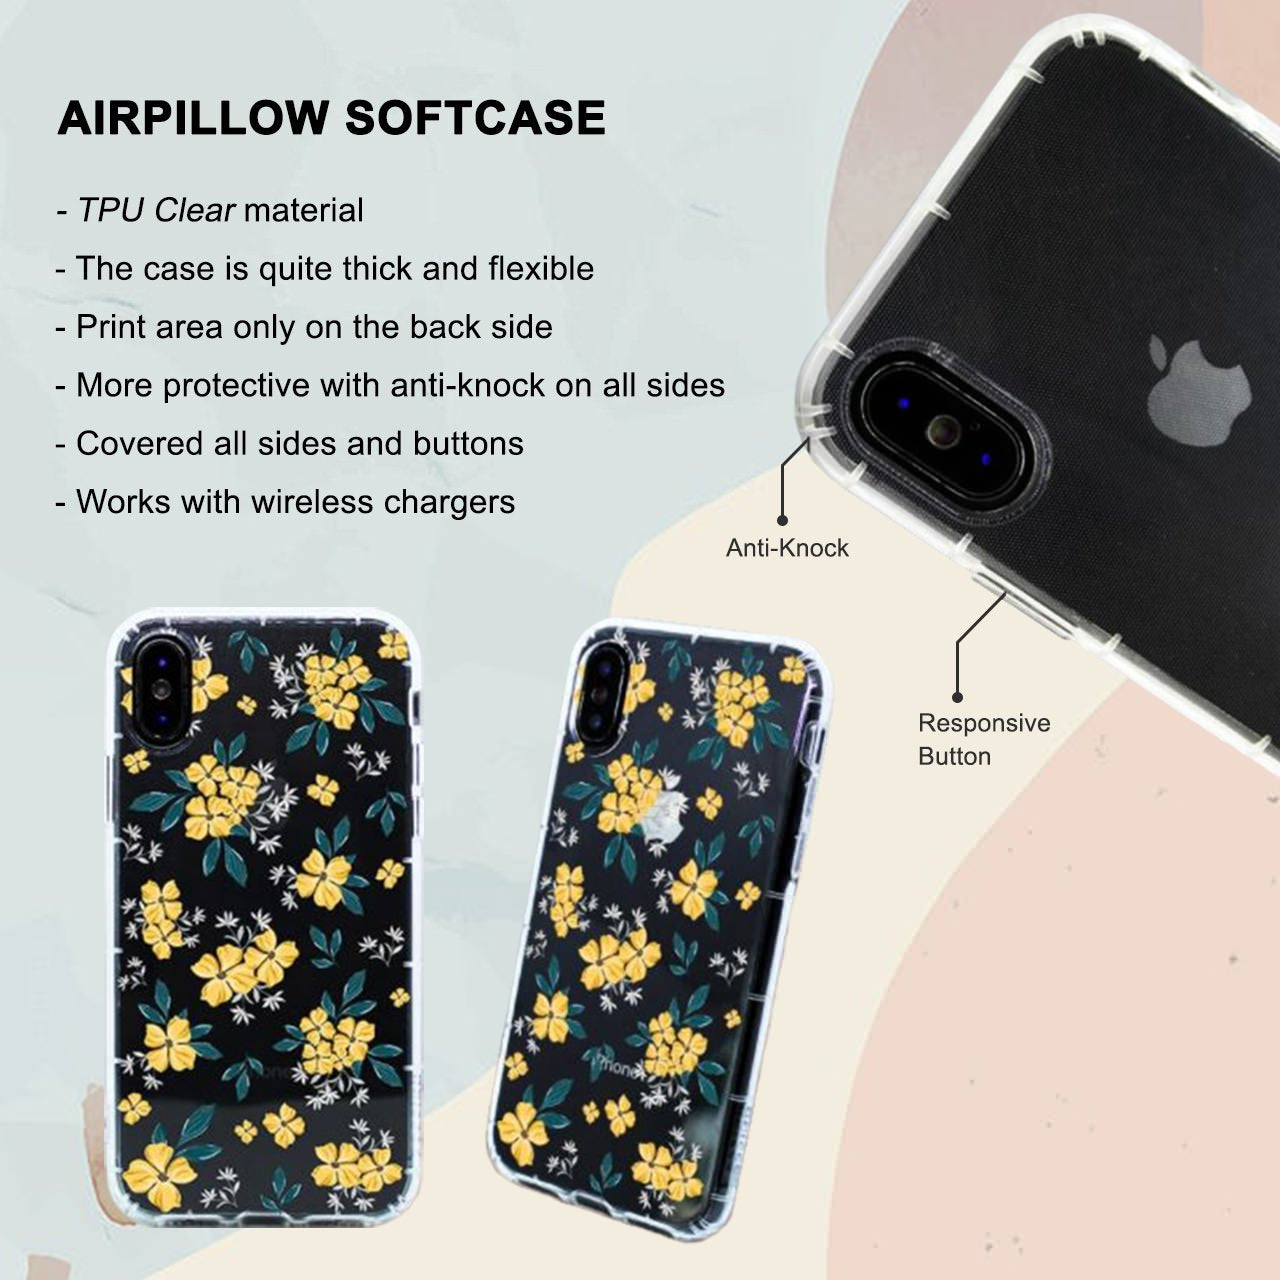 Golden Azure Marble iPhone 6/6S Case